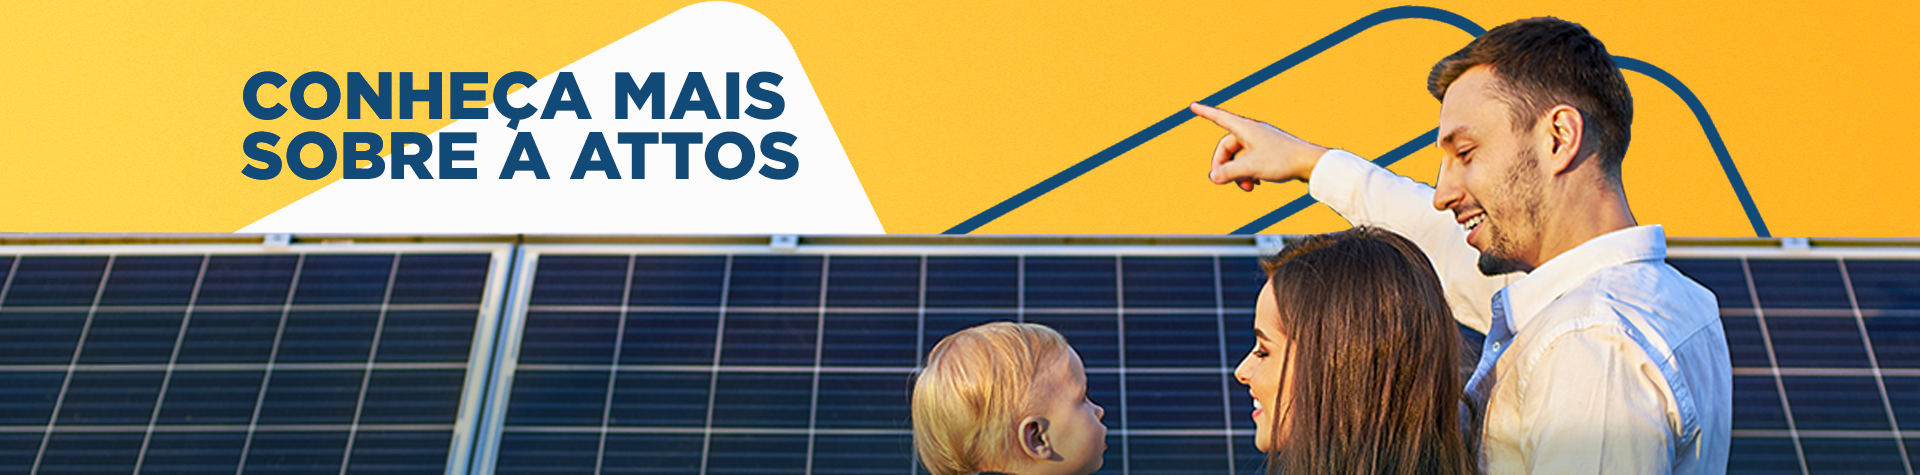 banner-desktop-1-attos-energia-solar